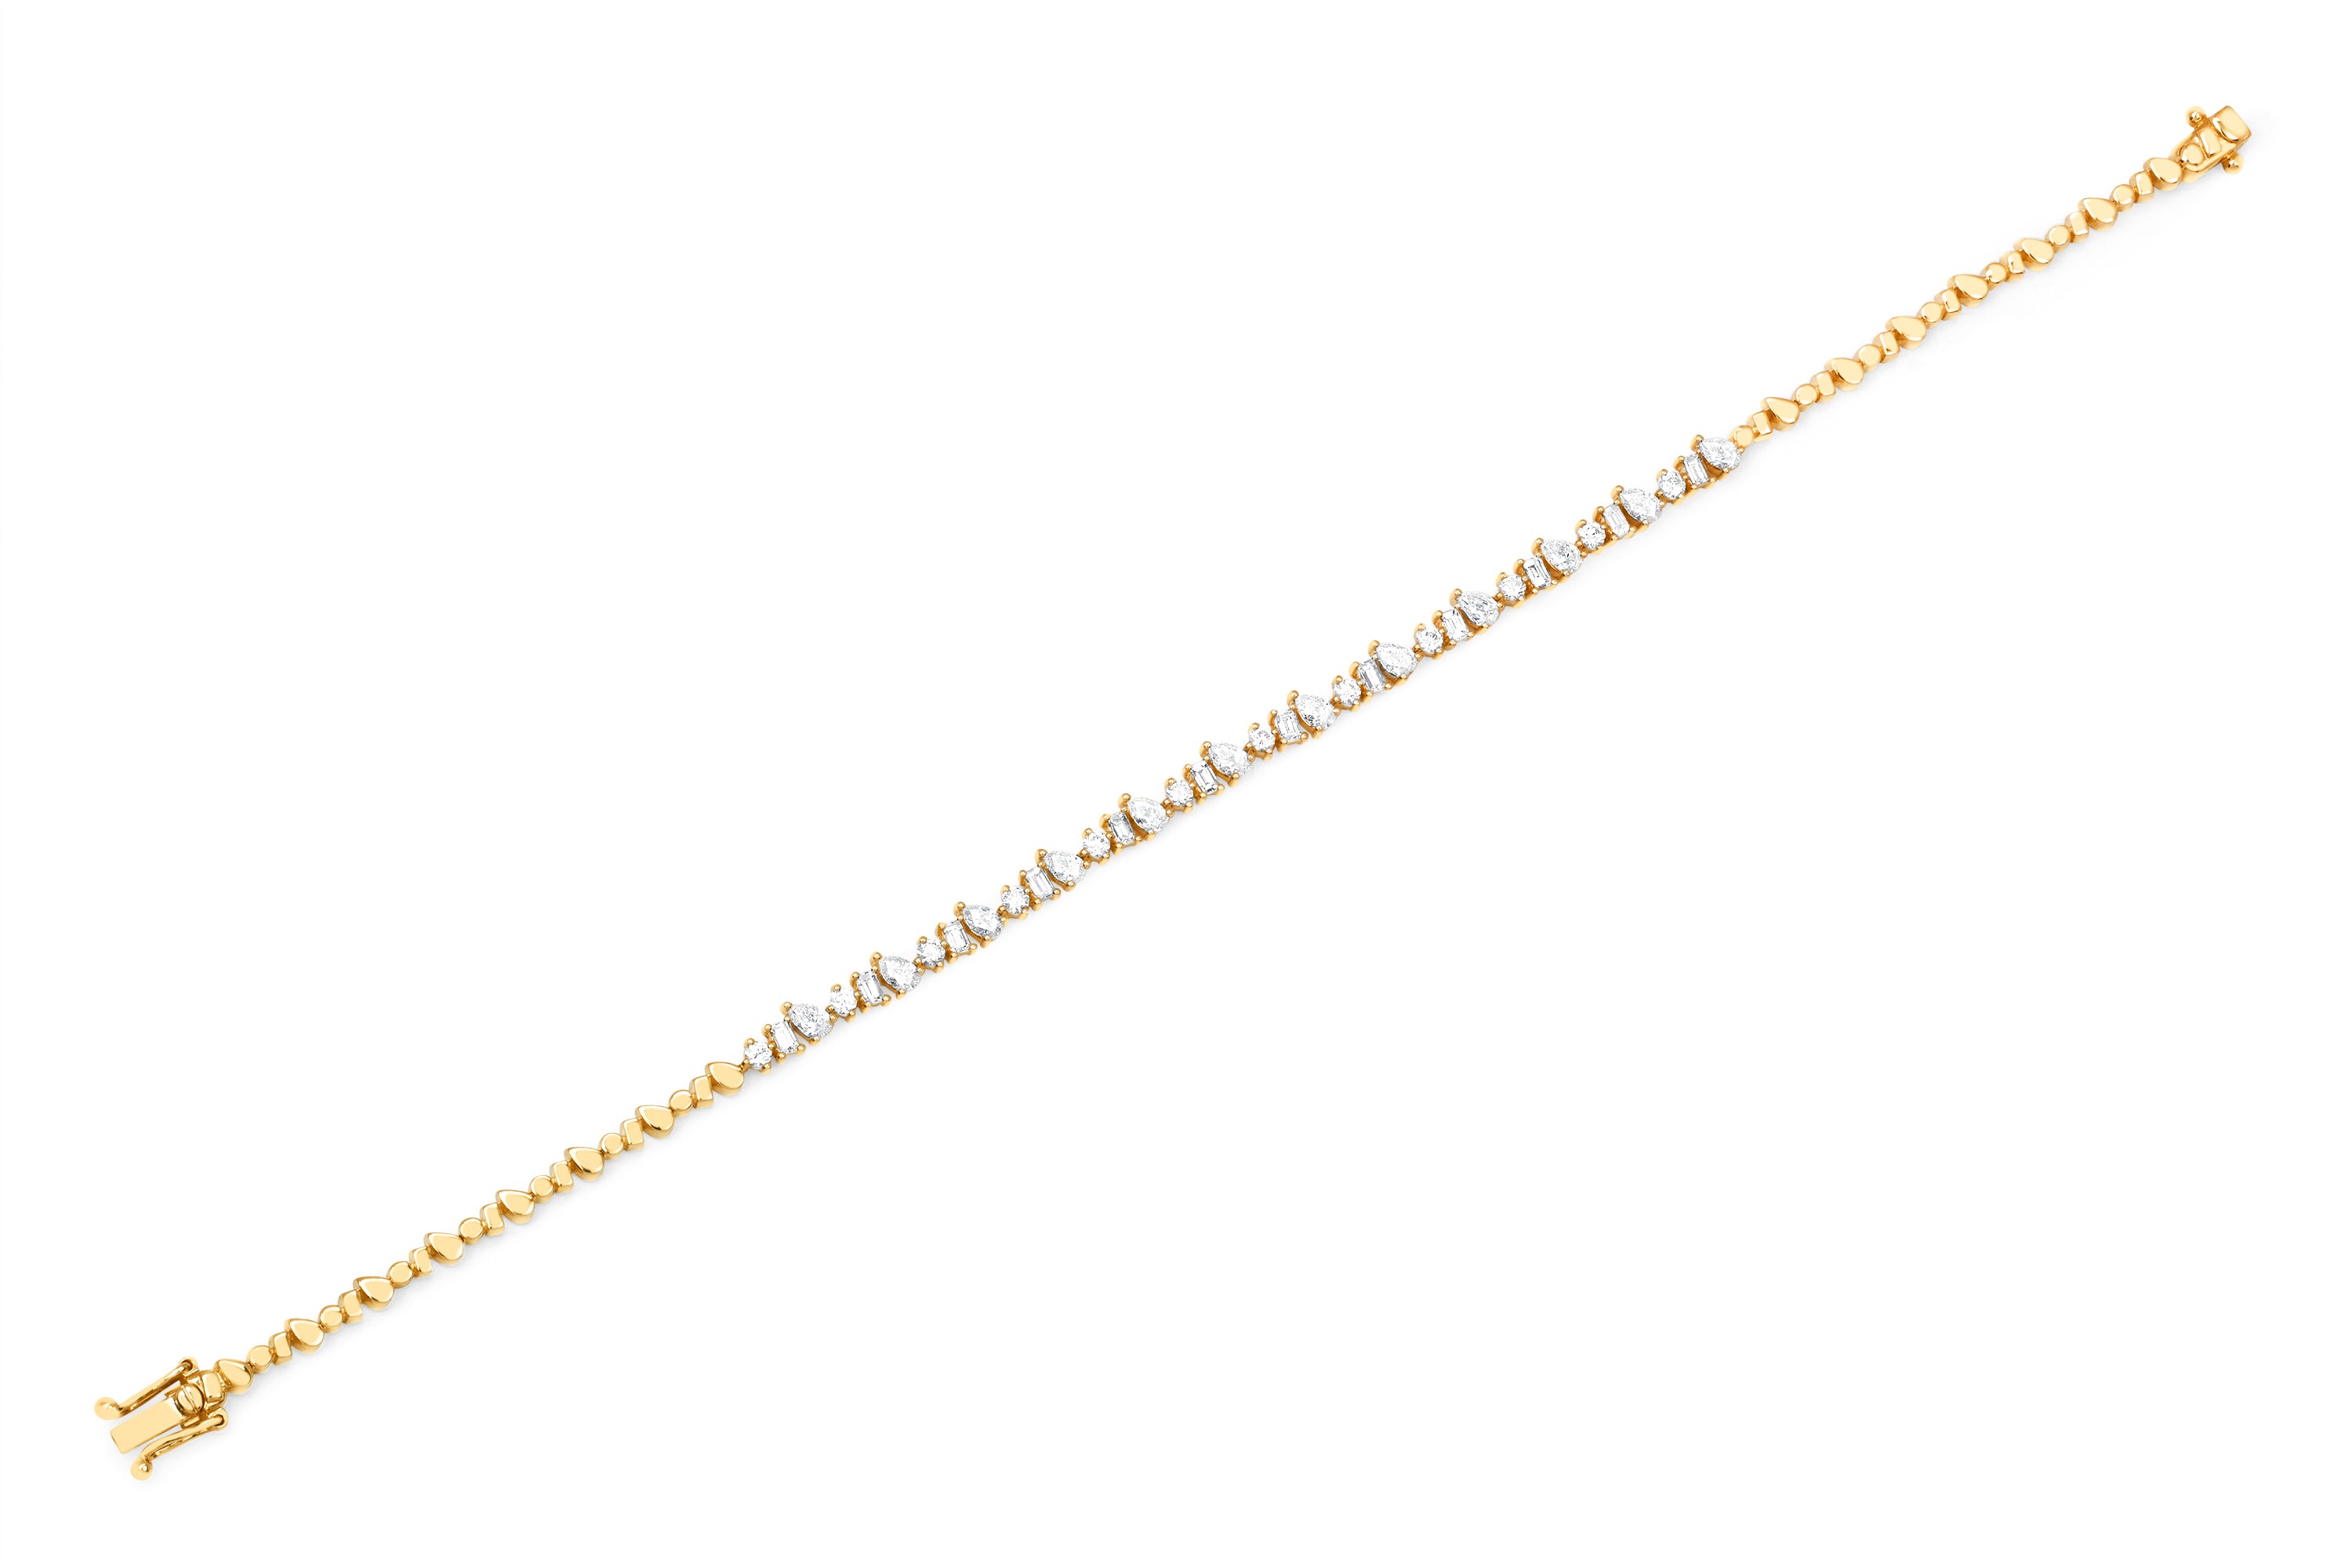 Diamond Multifaceted Eternity Bracelet in 14k yellow gold